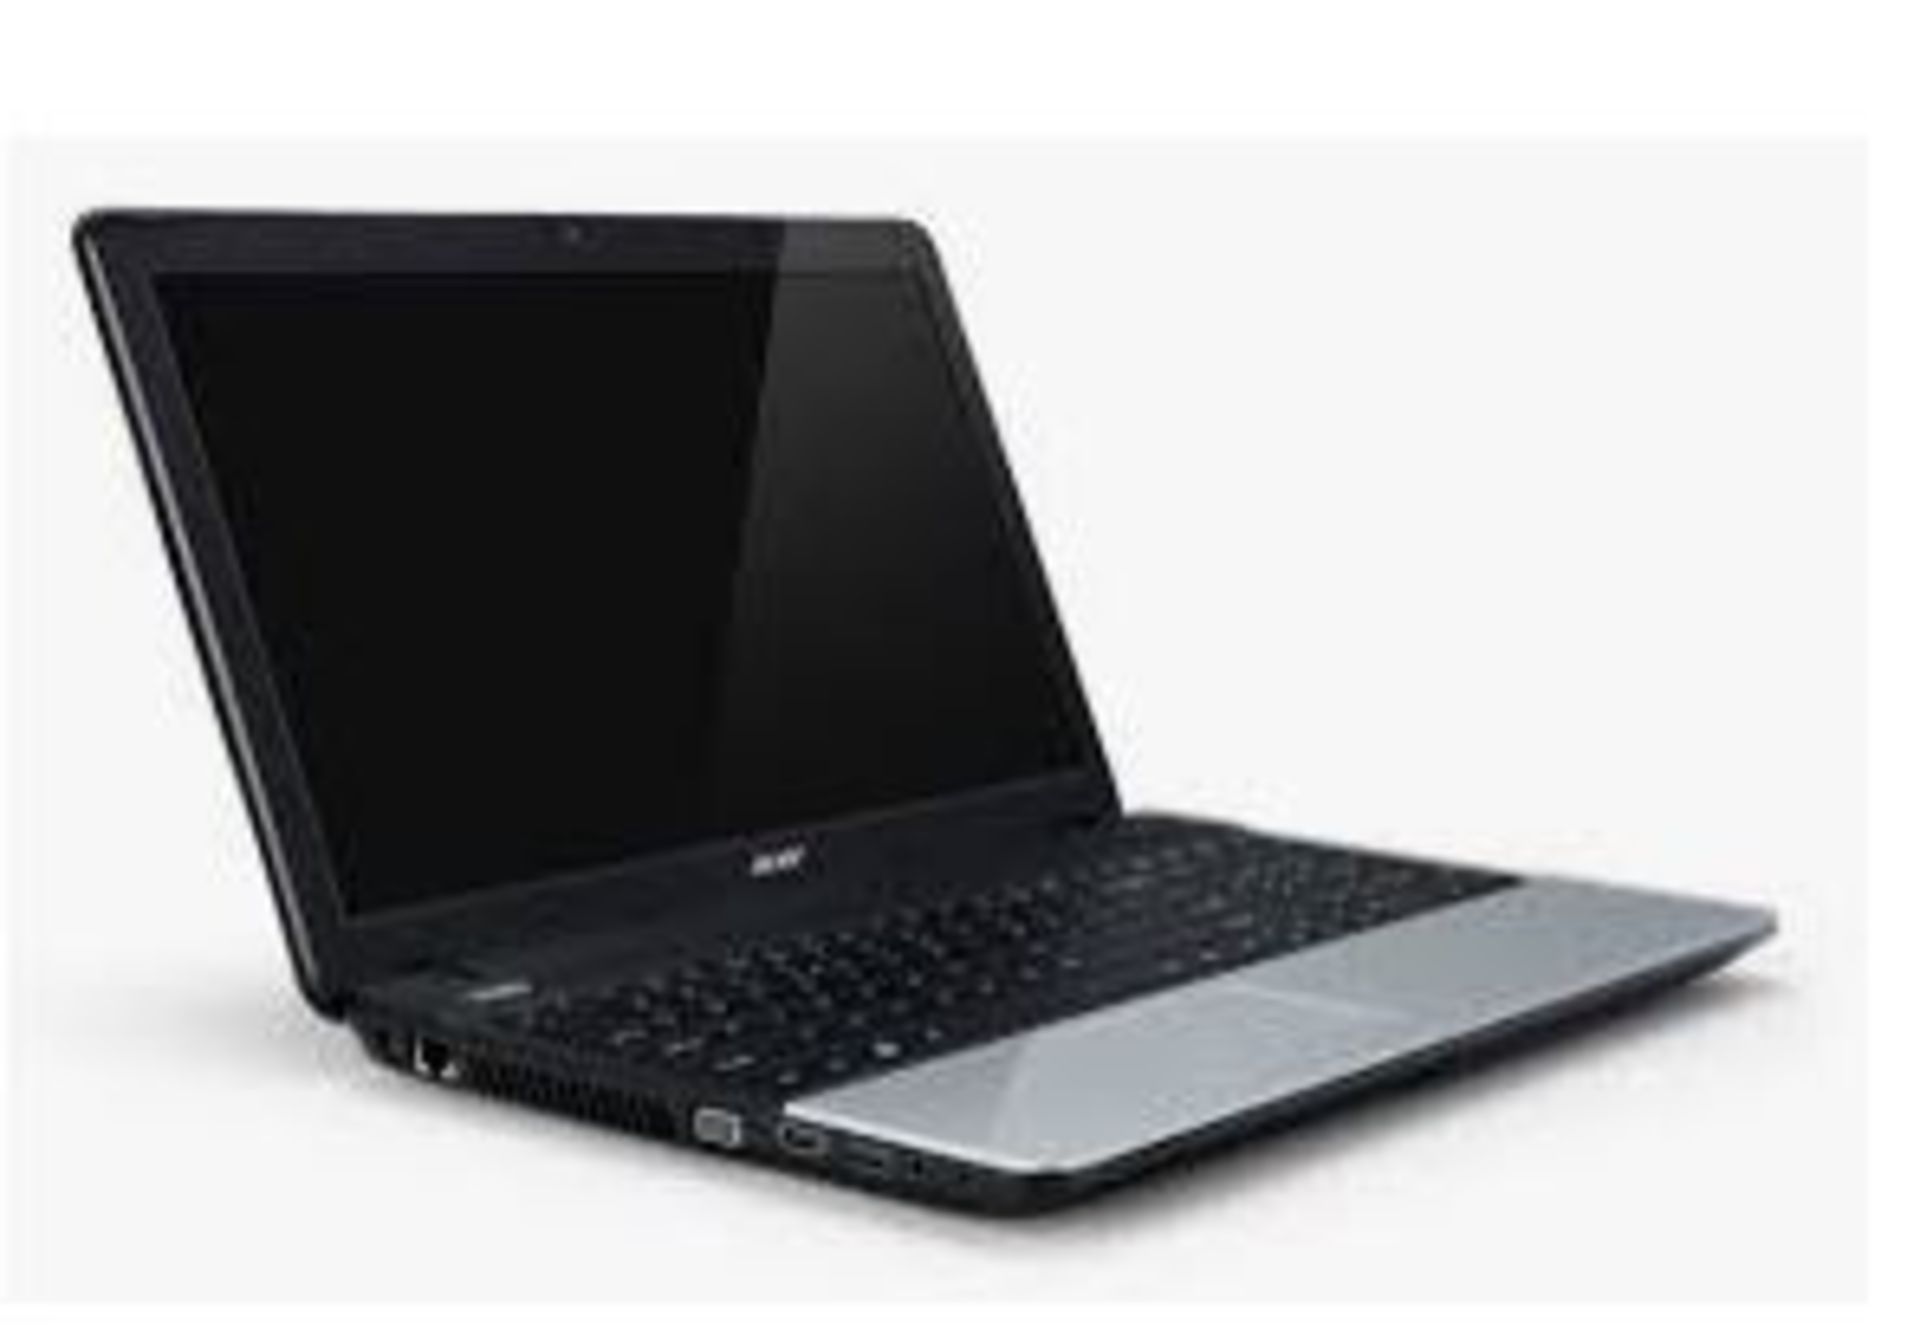 (13A) 1X Acer Aspire E1-531 Laptop Black. 15.6 HD LED LCD Screen. Intel B960 Processor (2.2Ghz, 2M